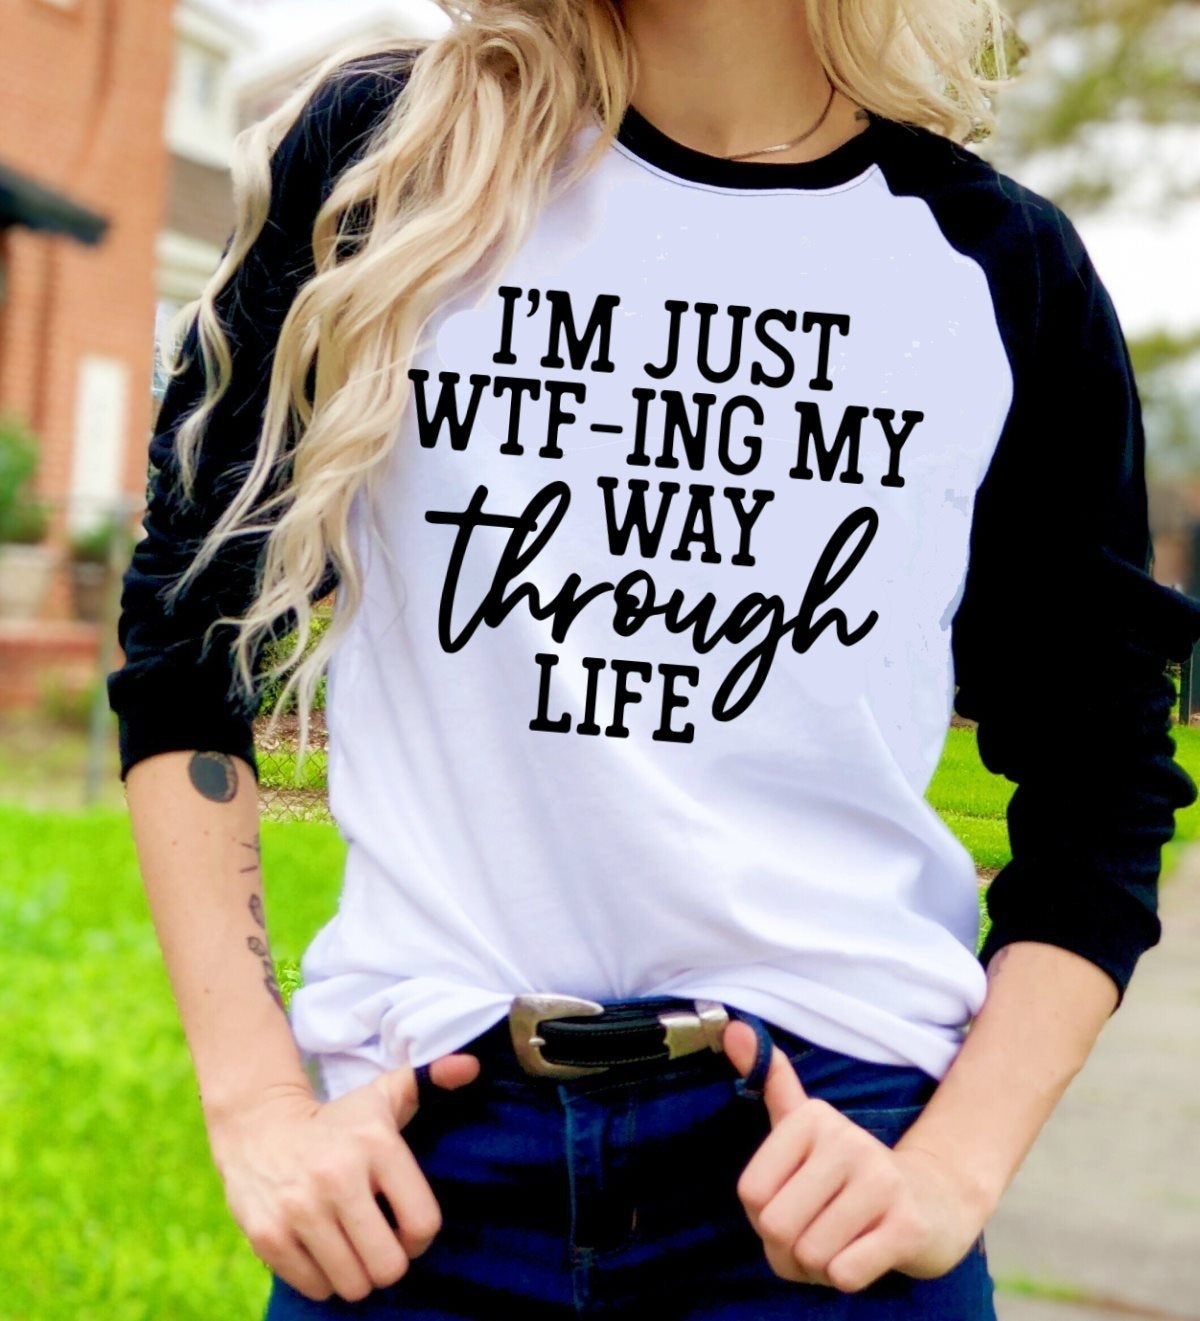 WTFing My Way Through Life Funny Adult Shirt Funny Graphic Tee T-Shirt Raglan Shirt